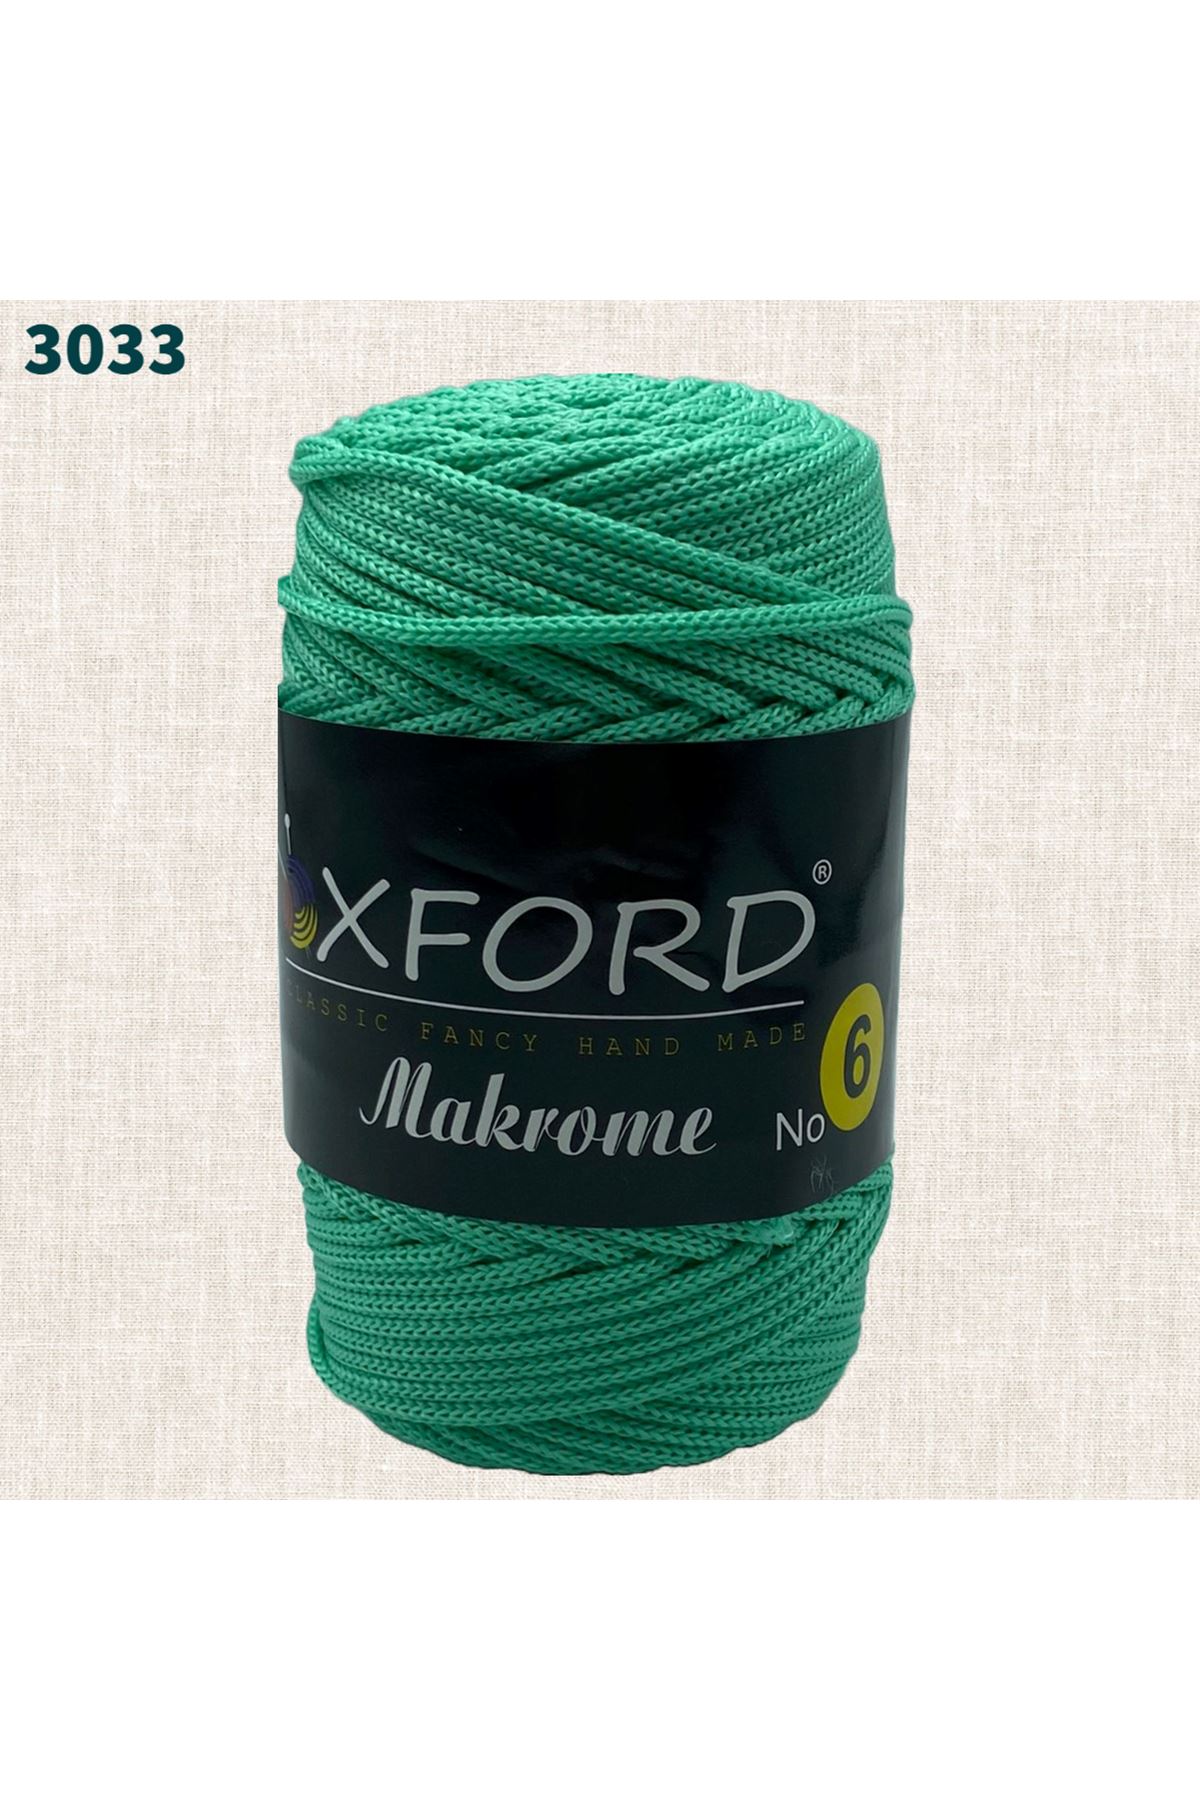 Oxford 6 No Makrome - 3033 Yeşil